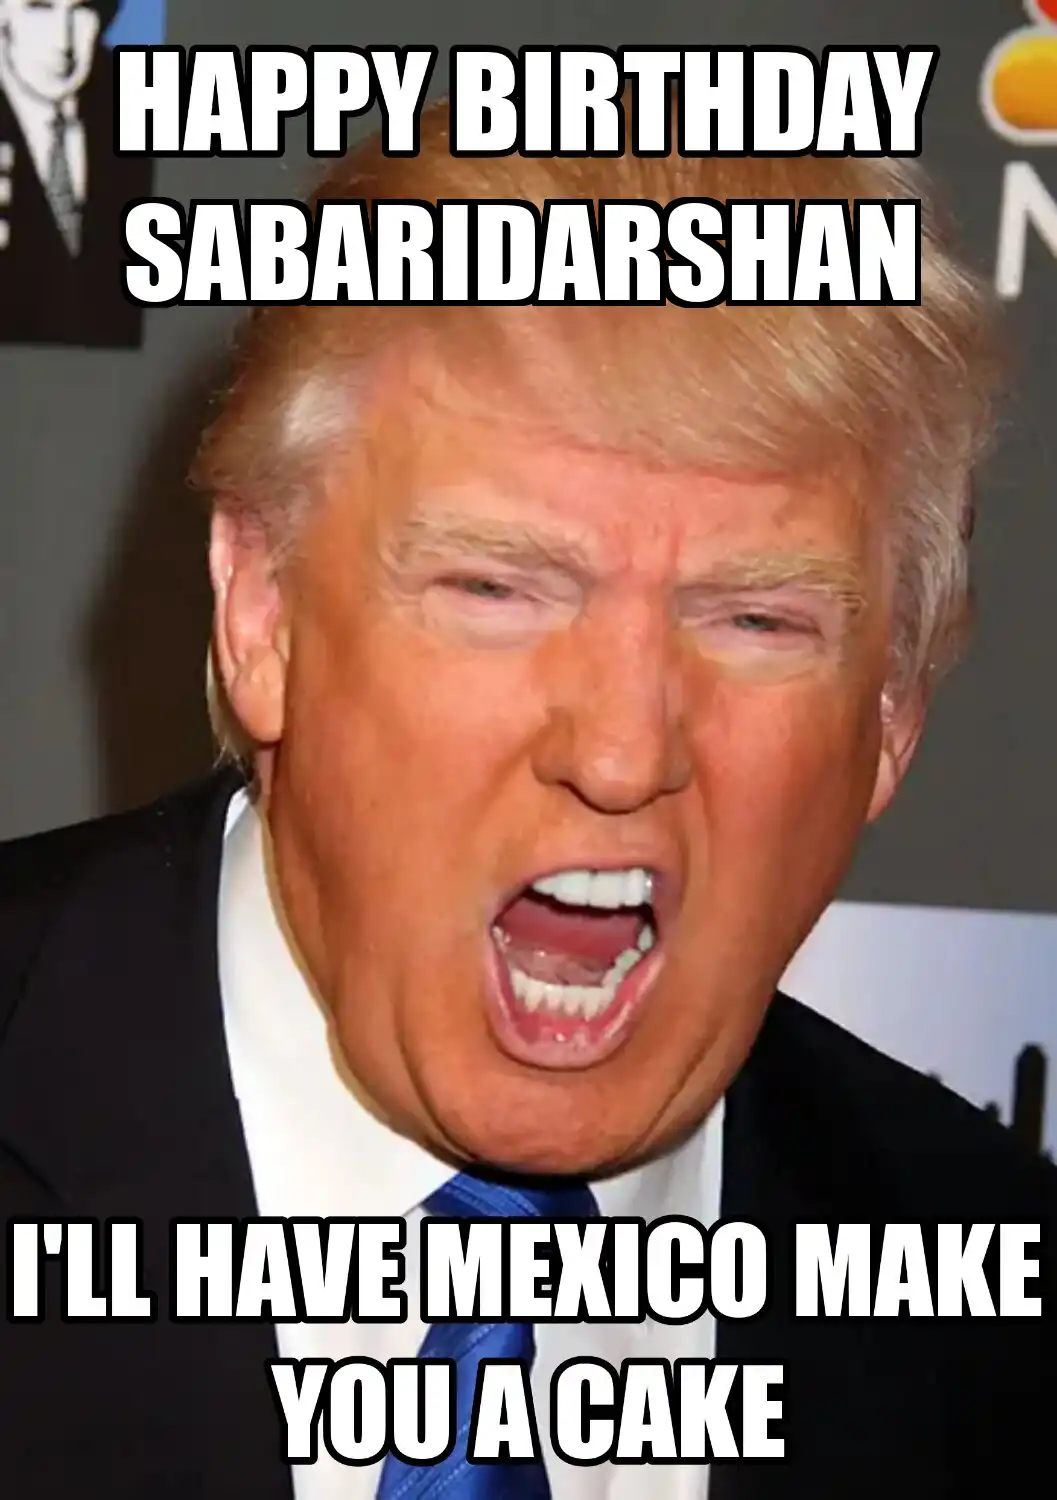 Happy Birthday Sabaridarshan Mexico Make You A Cake Meme